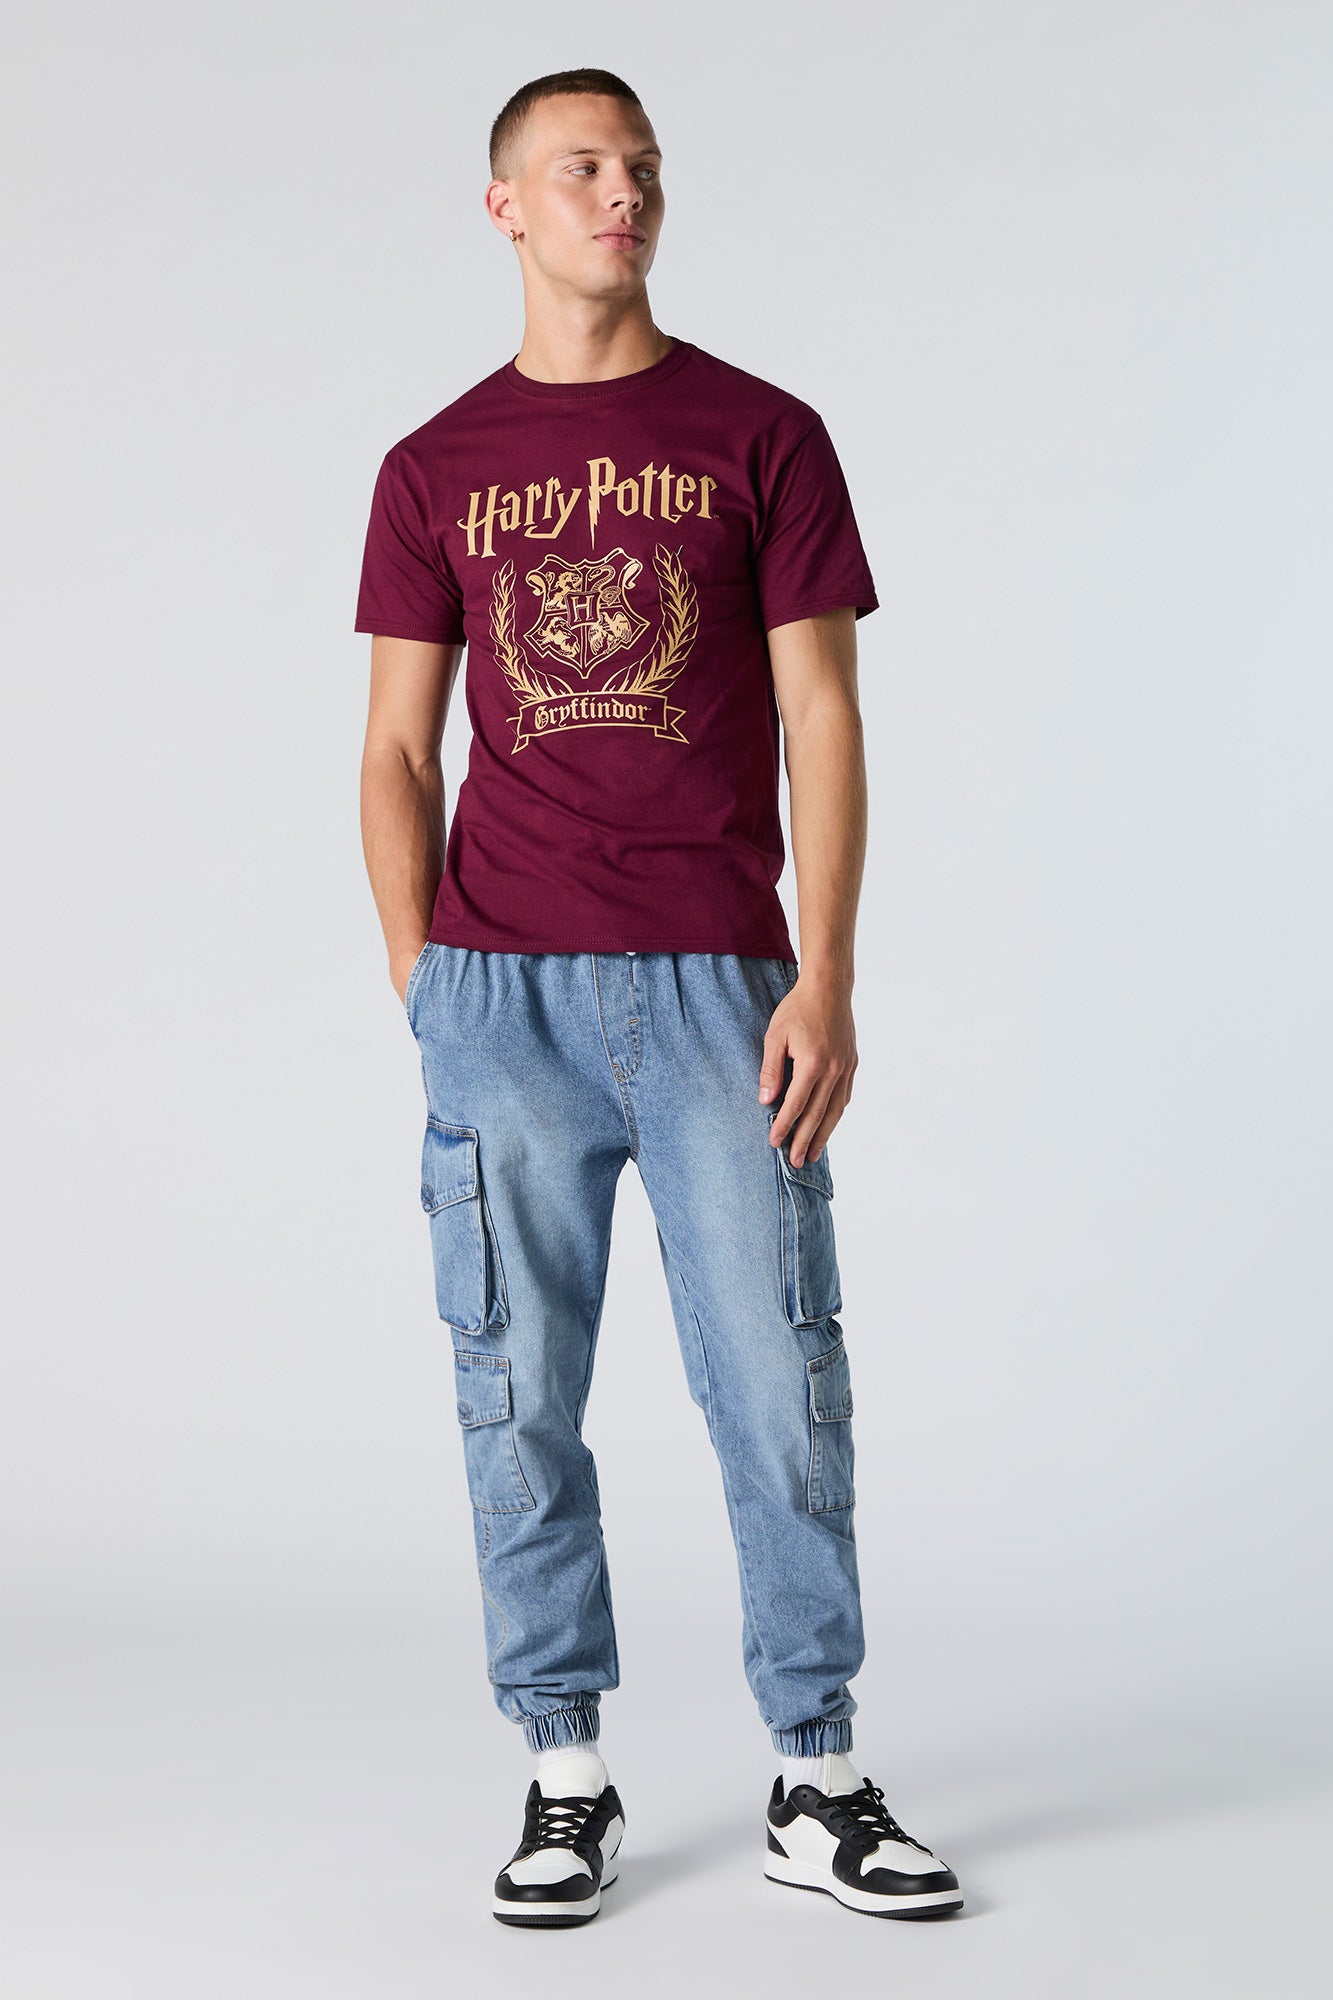 Harry Potter Gryffindor Graphic T-Shirt